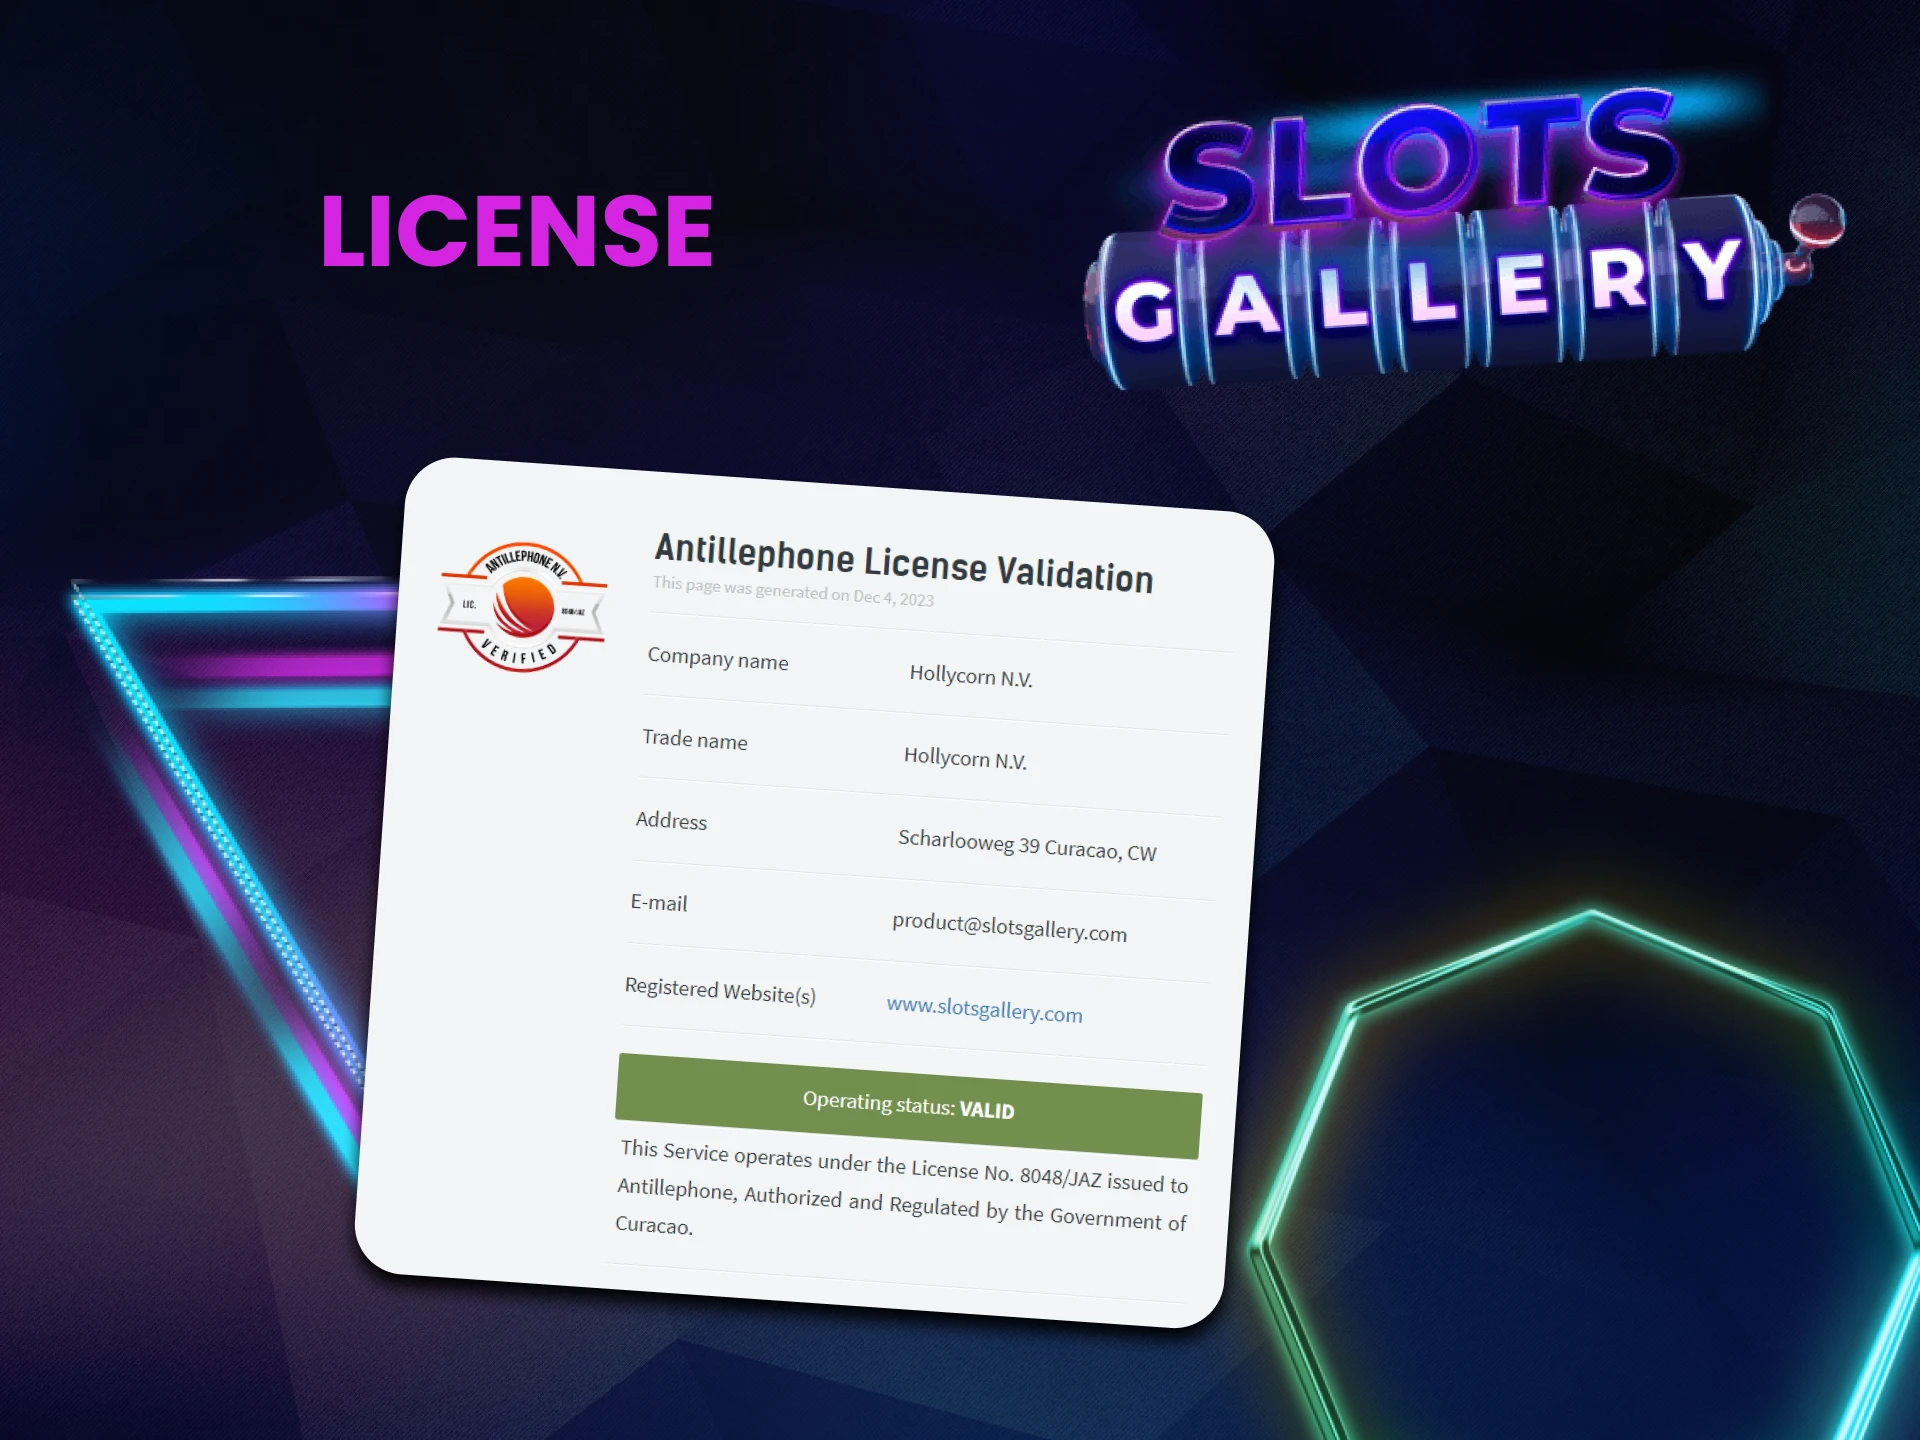 Slots Gallery has a special license.